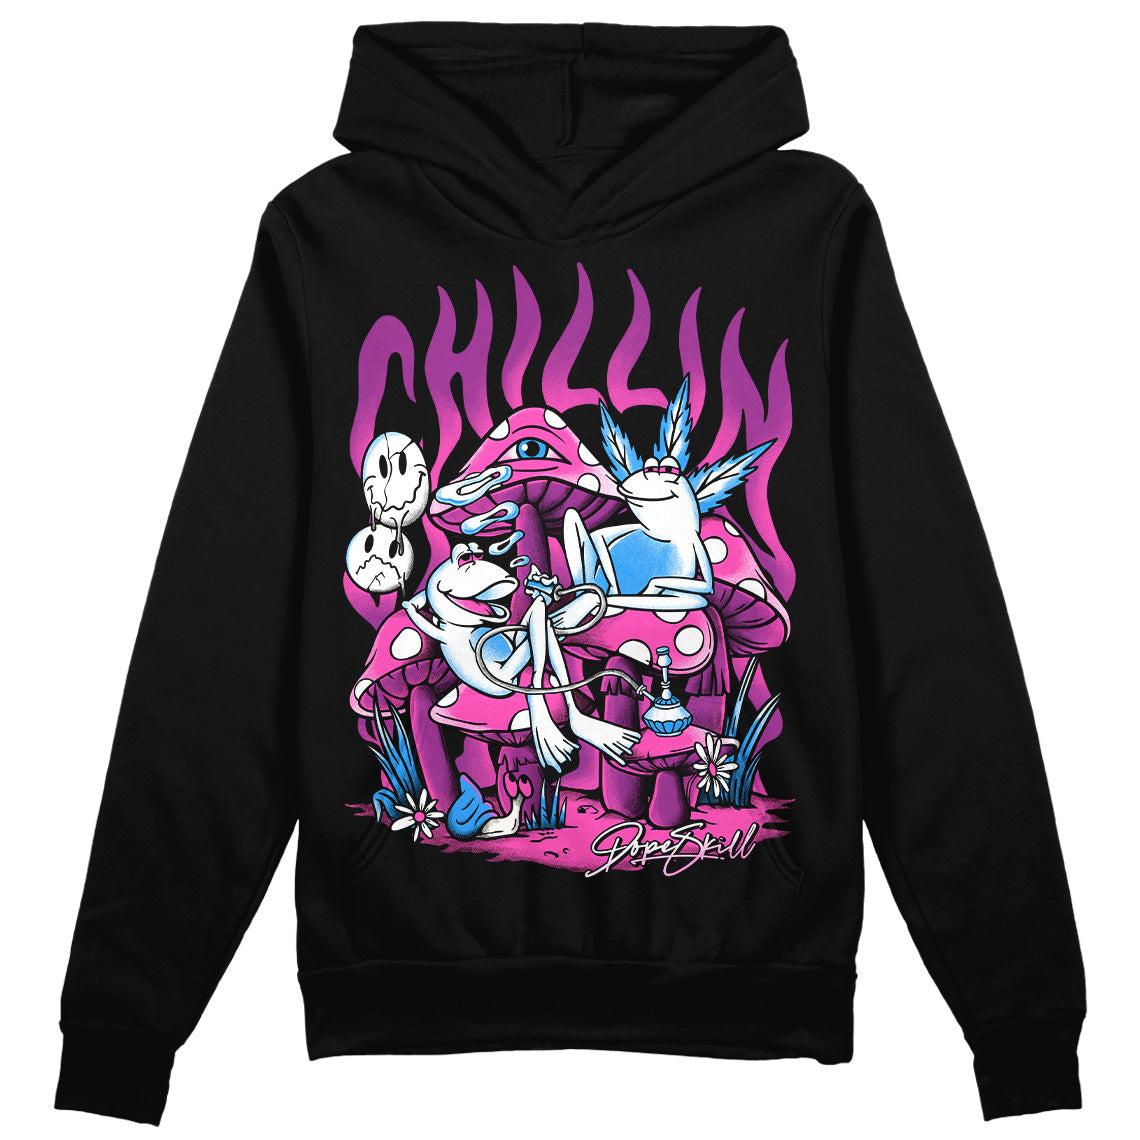 Jordan 4 GS “Hyper Violet” DopeSkill Hoodie Sweatshirt Chillin Graphic Streetwear - Black